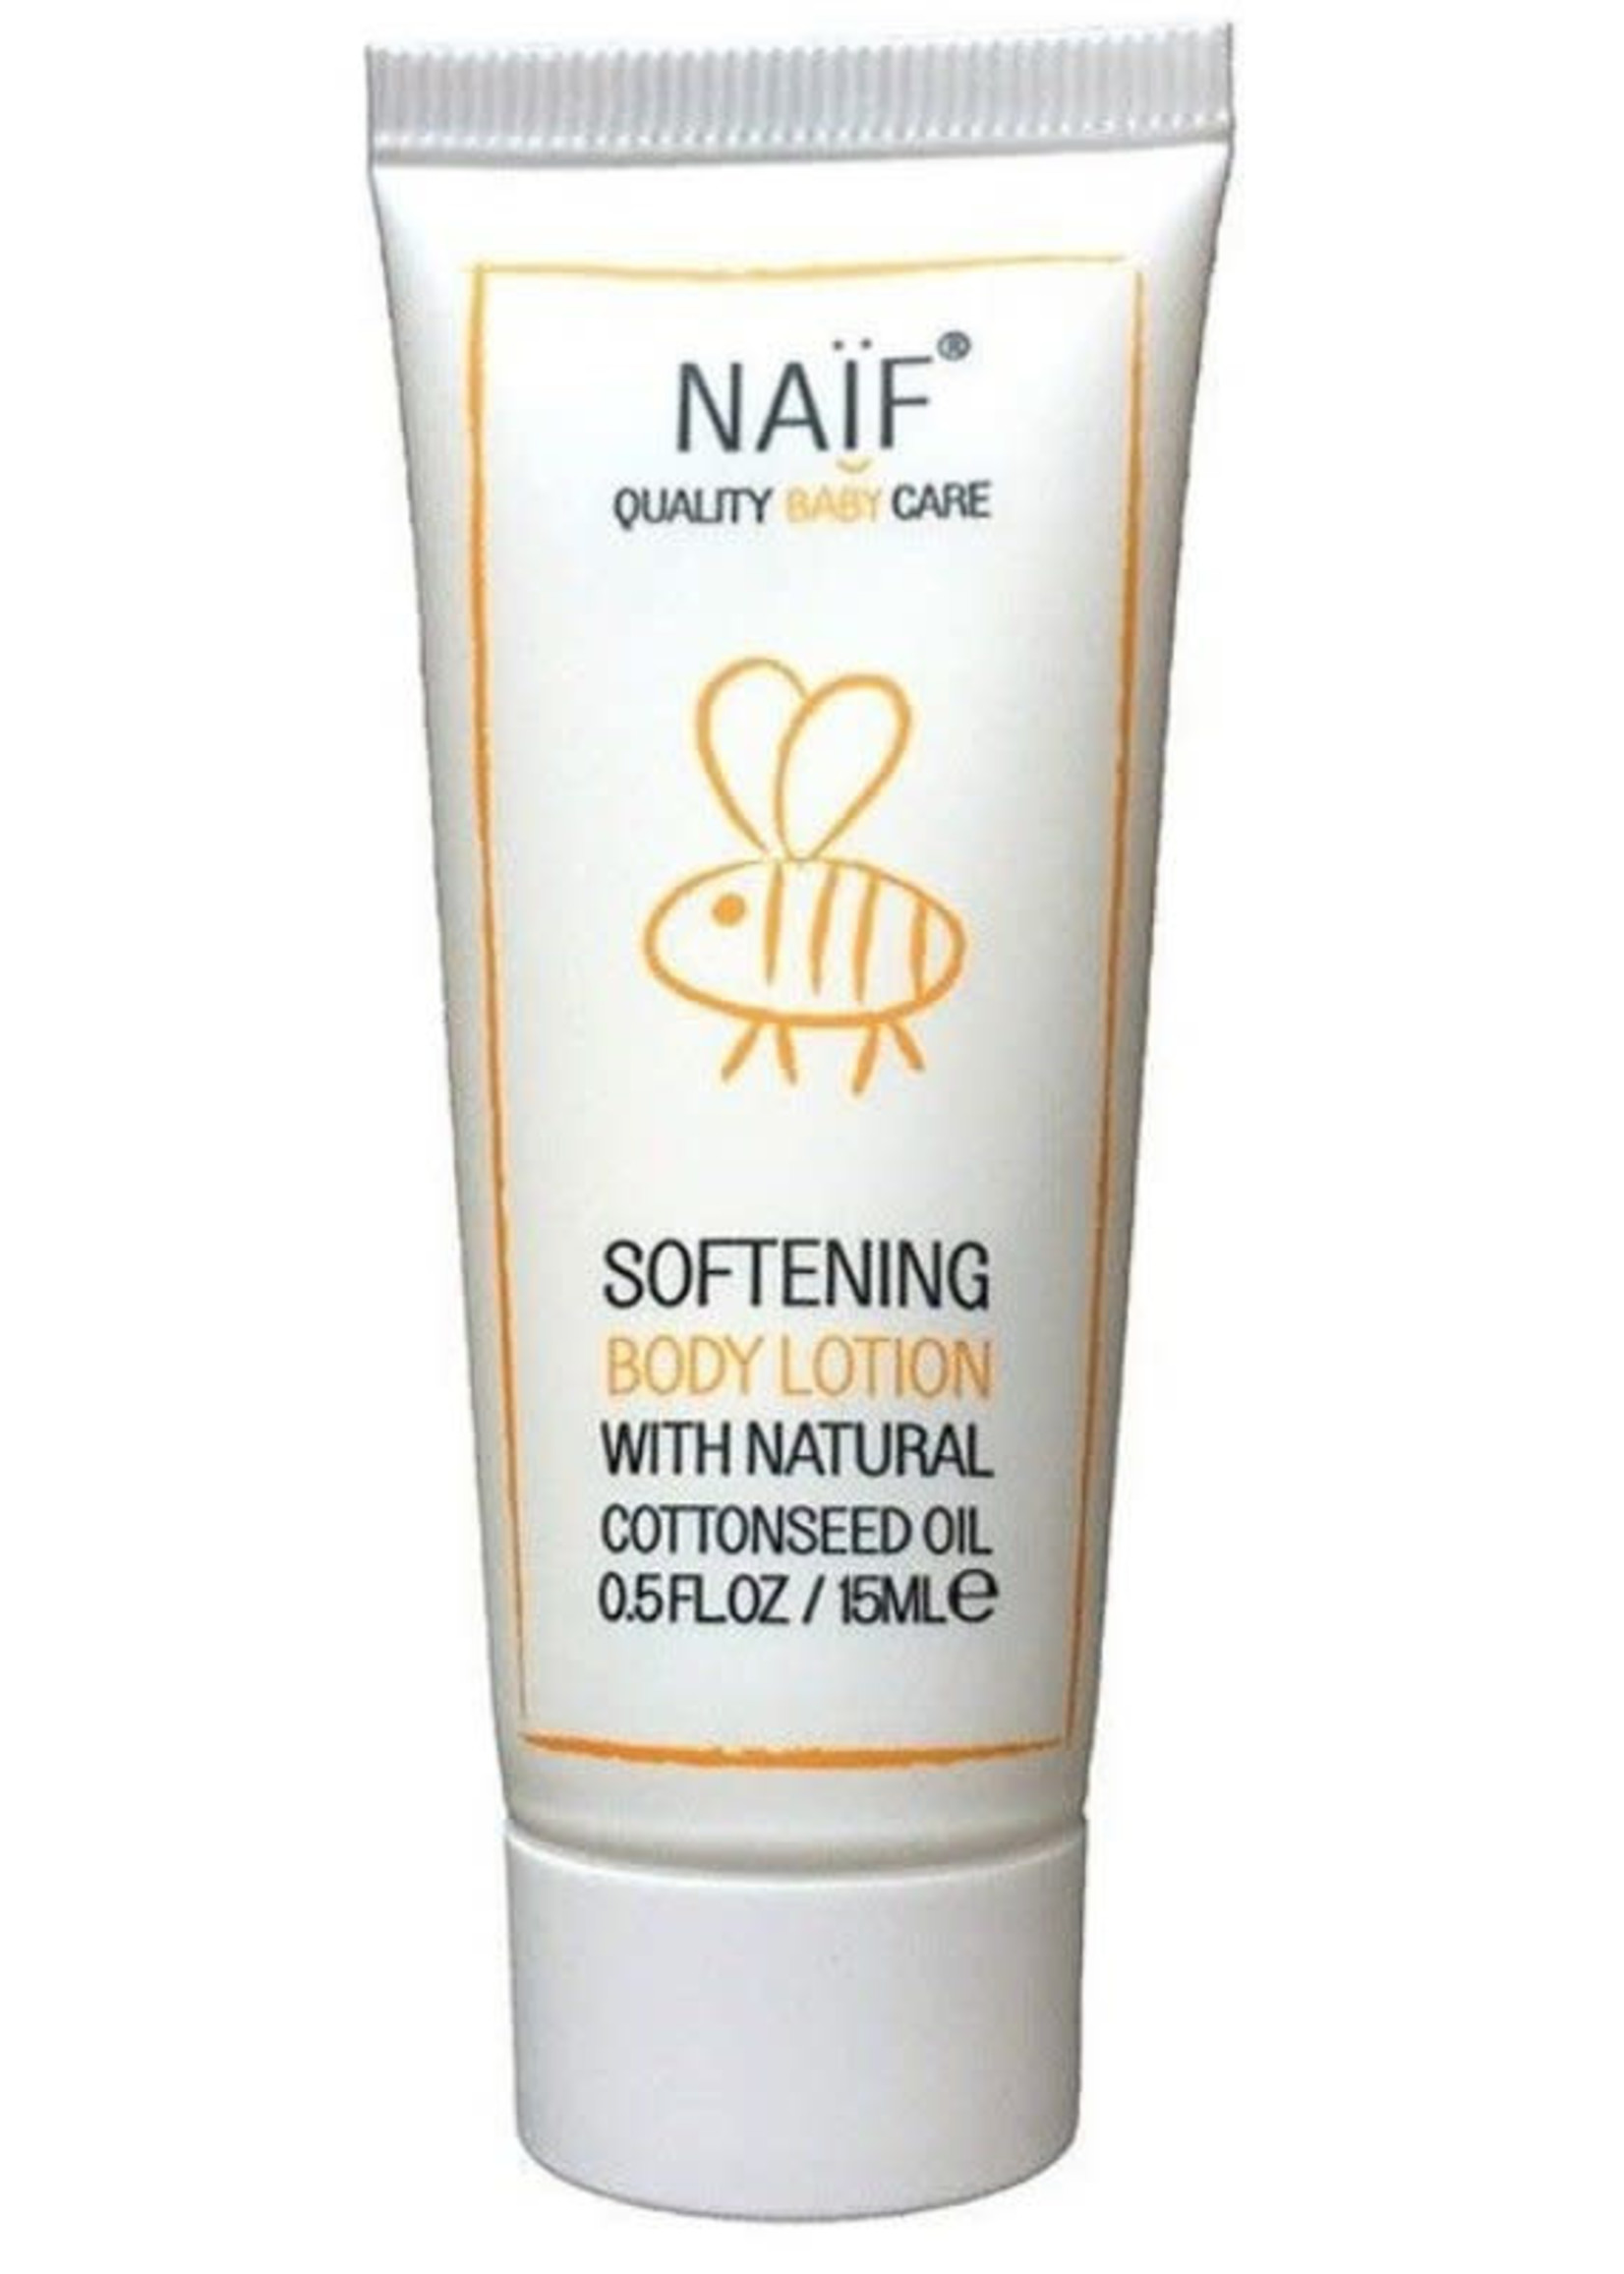 Naïf Softening Body Lotion - sample